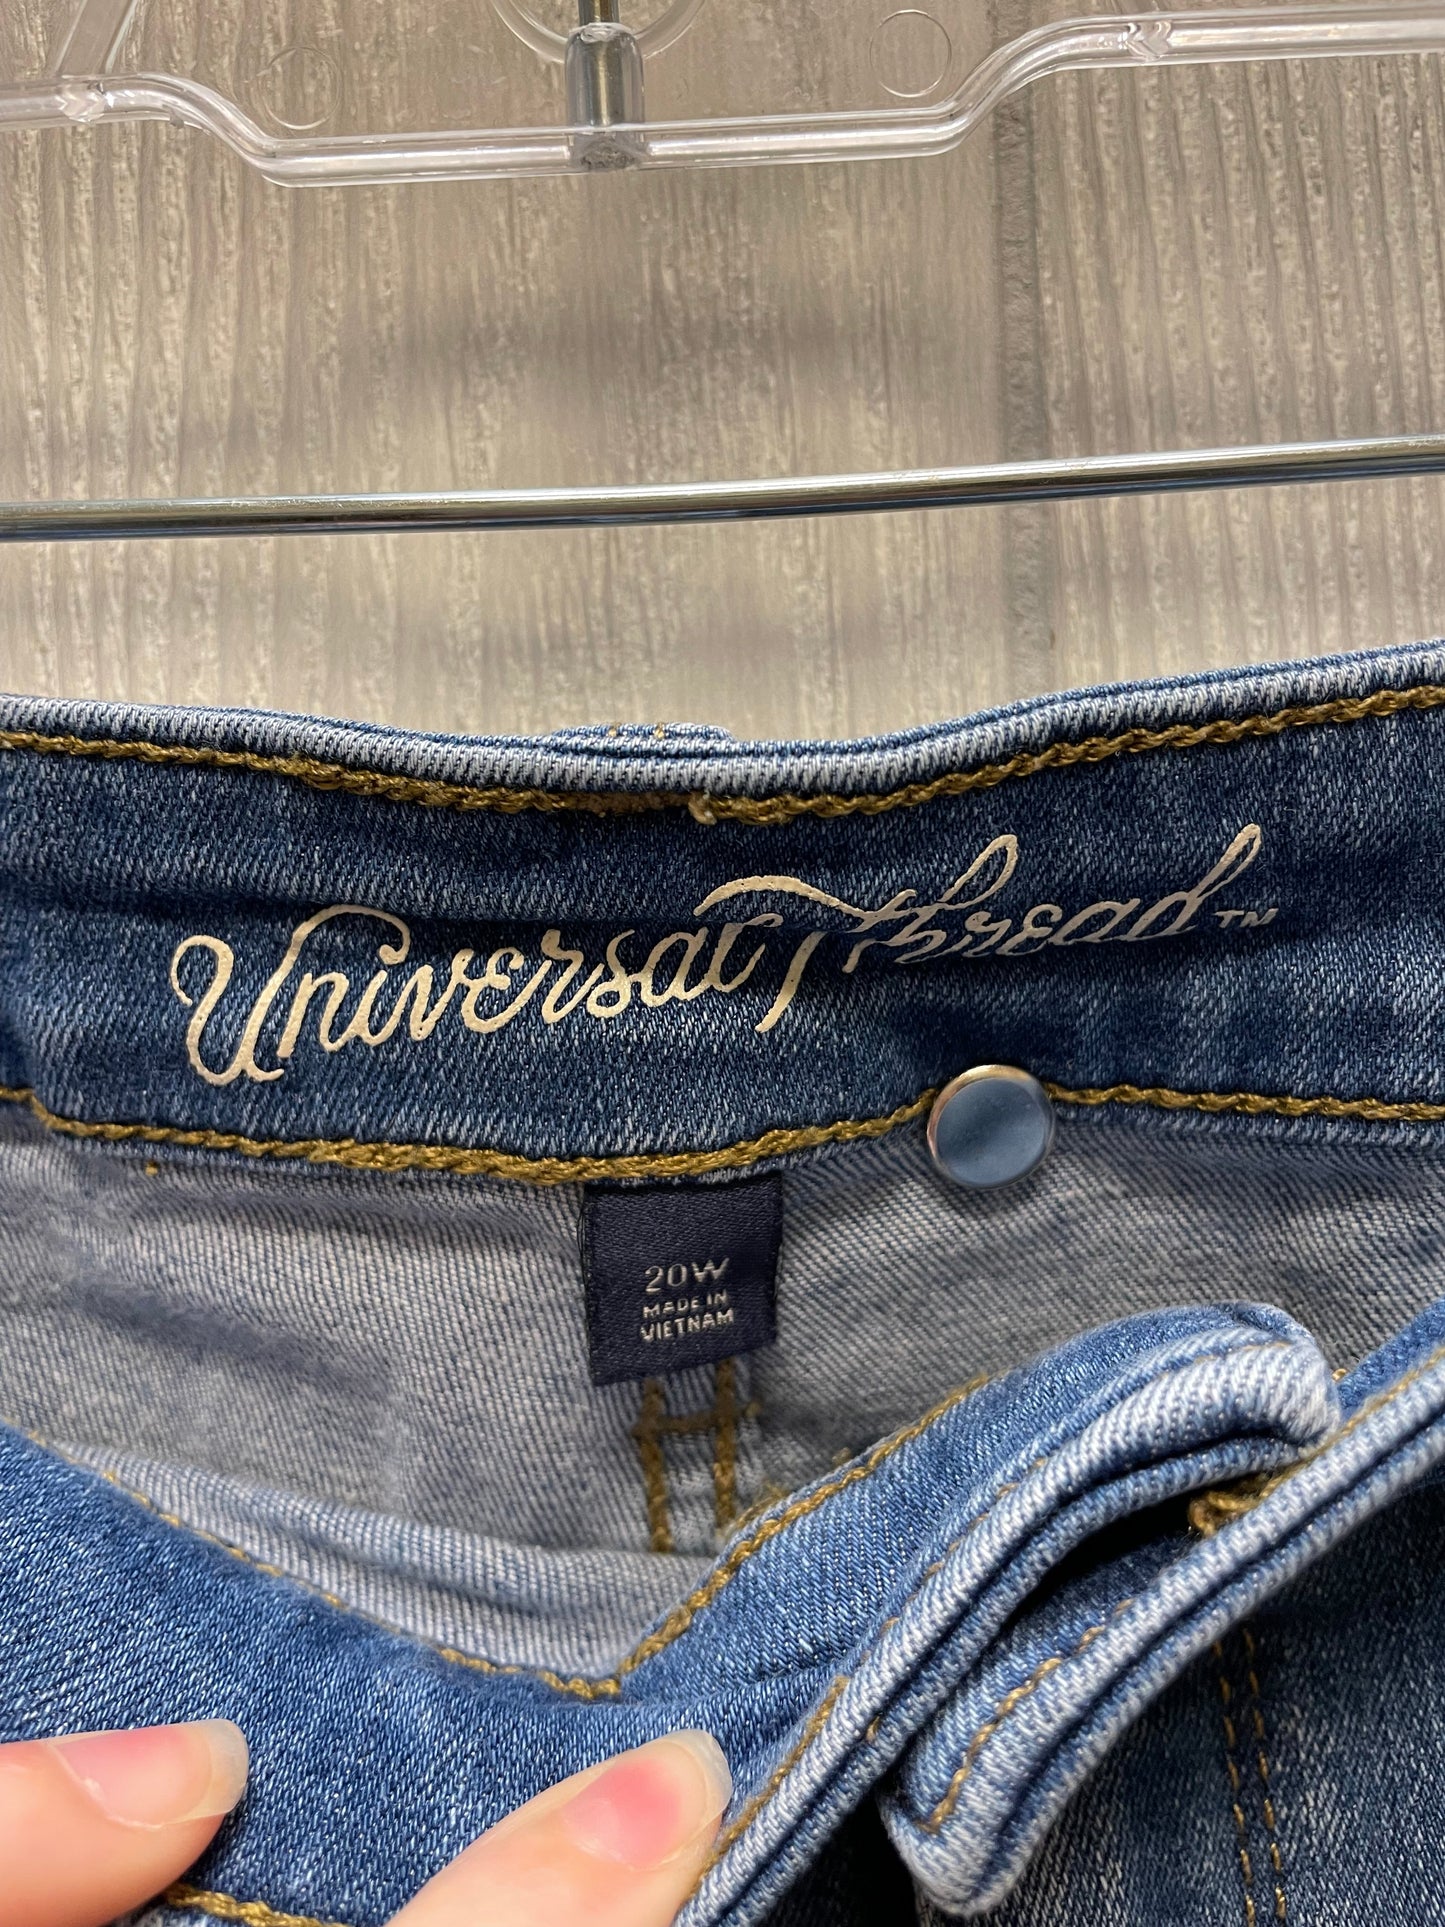 Blue Denim Shorts Universal Thread, Size 20